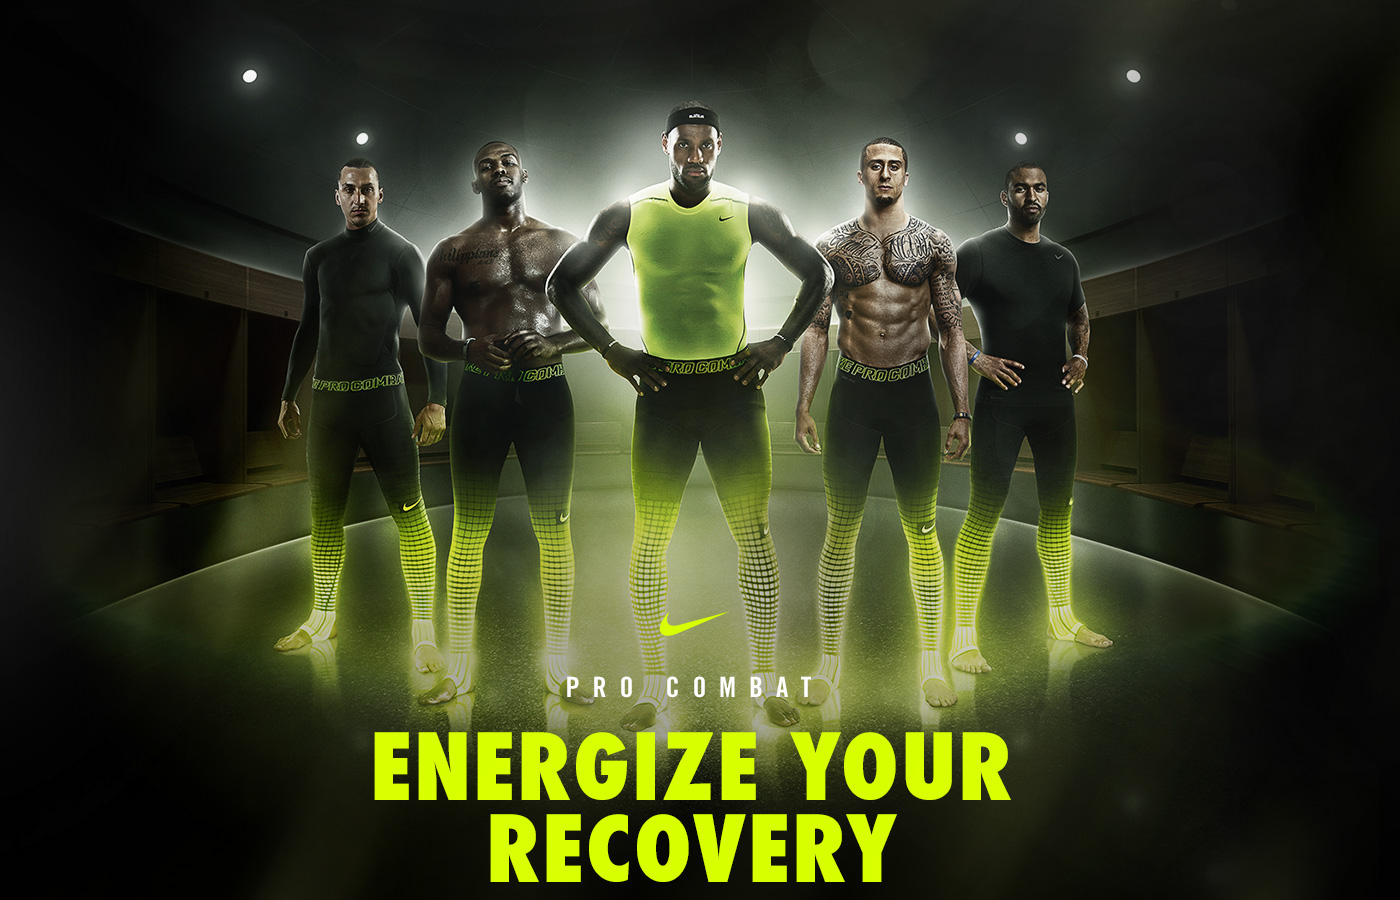 Nike athletic training recovery hypertight sport Pro Combat workout athlete